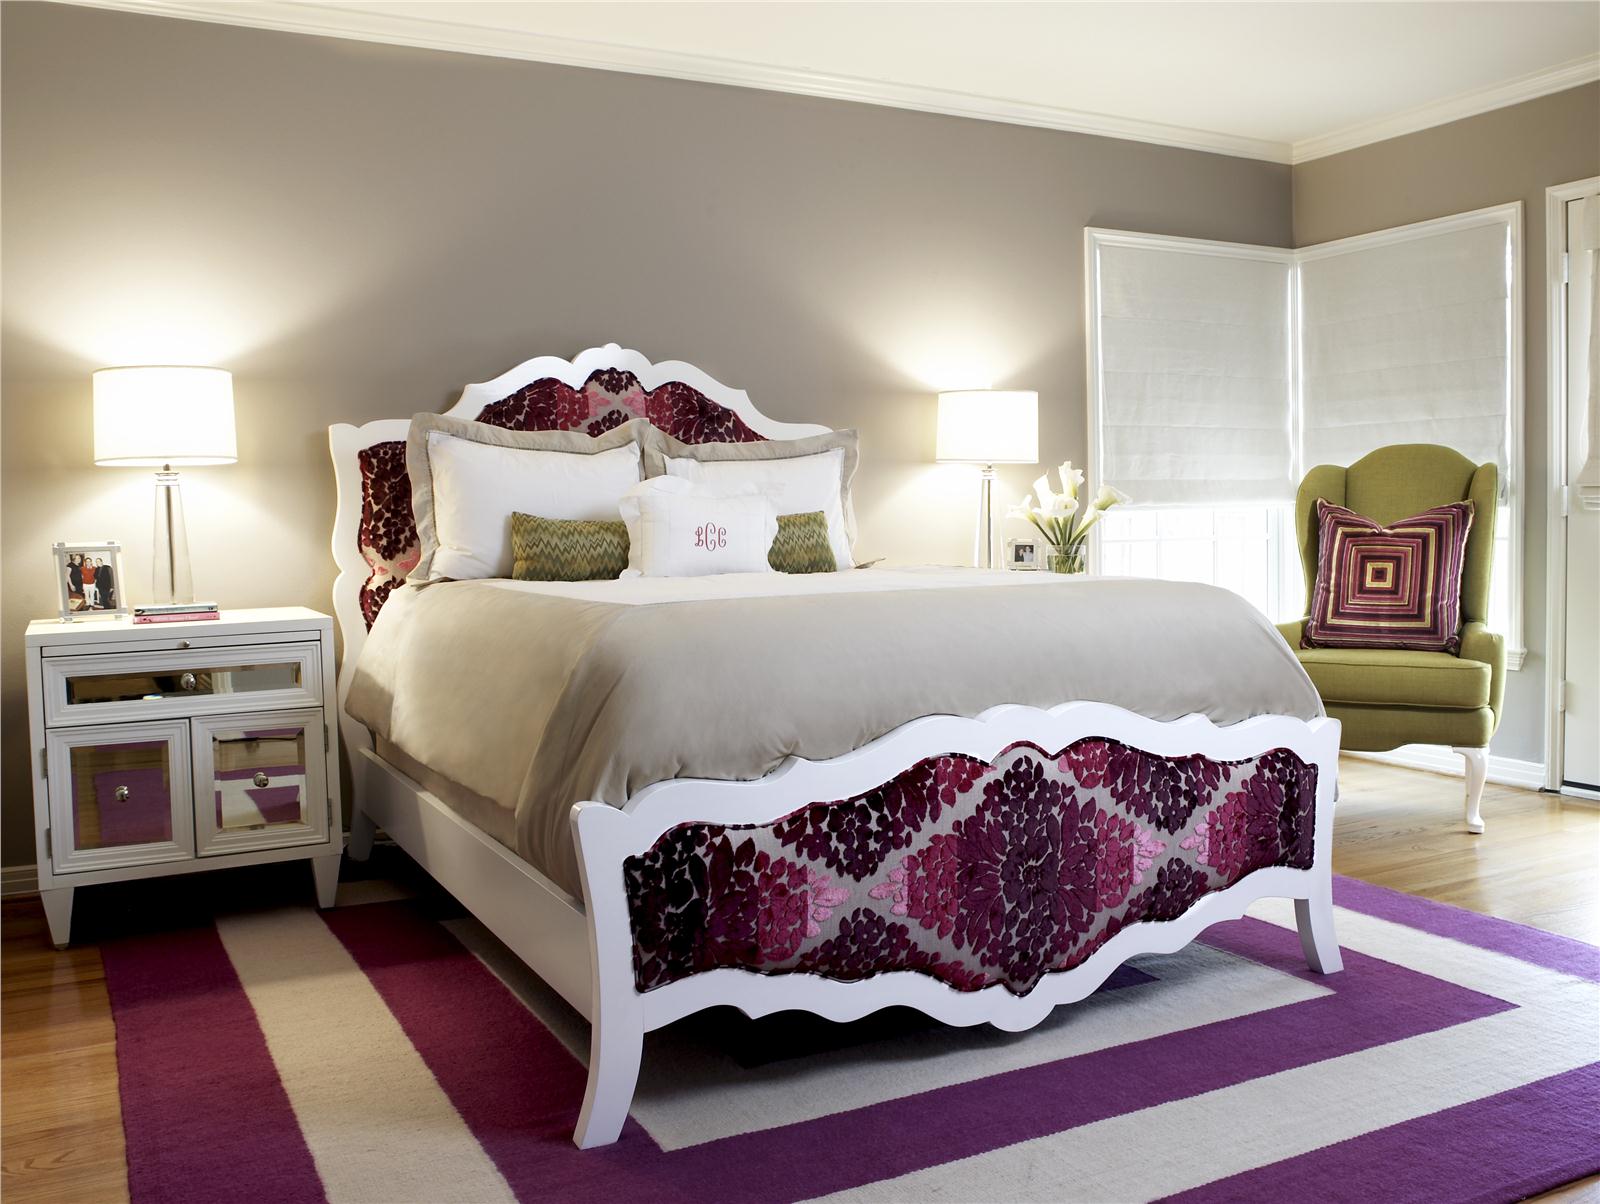 purple carpet in the bedroom